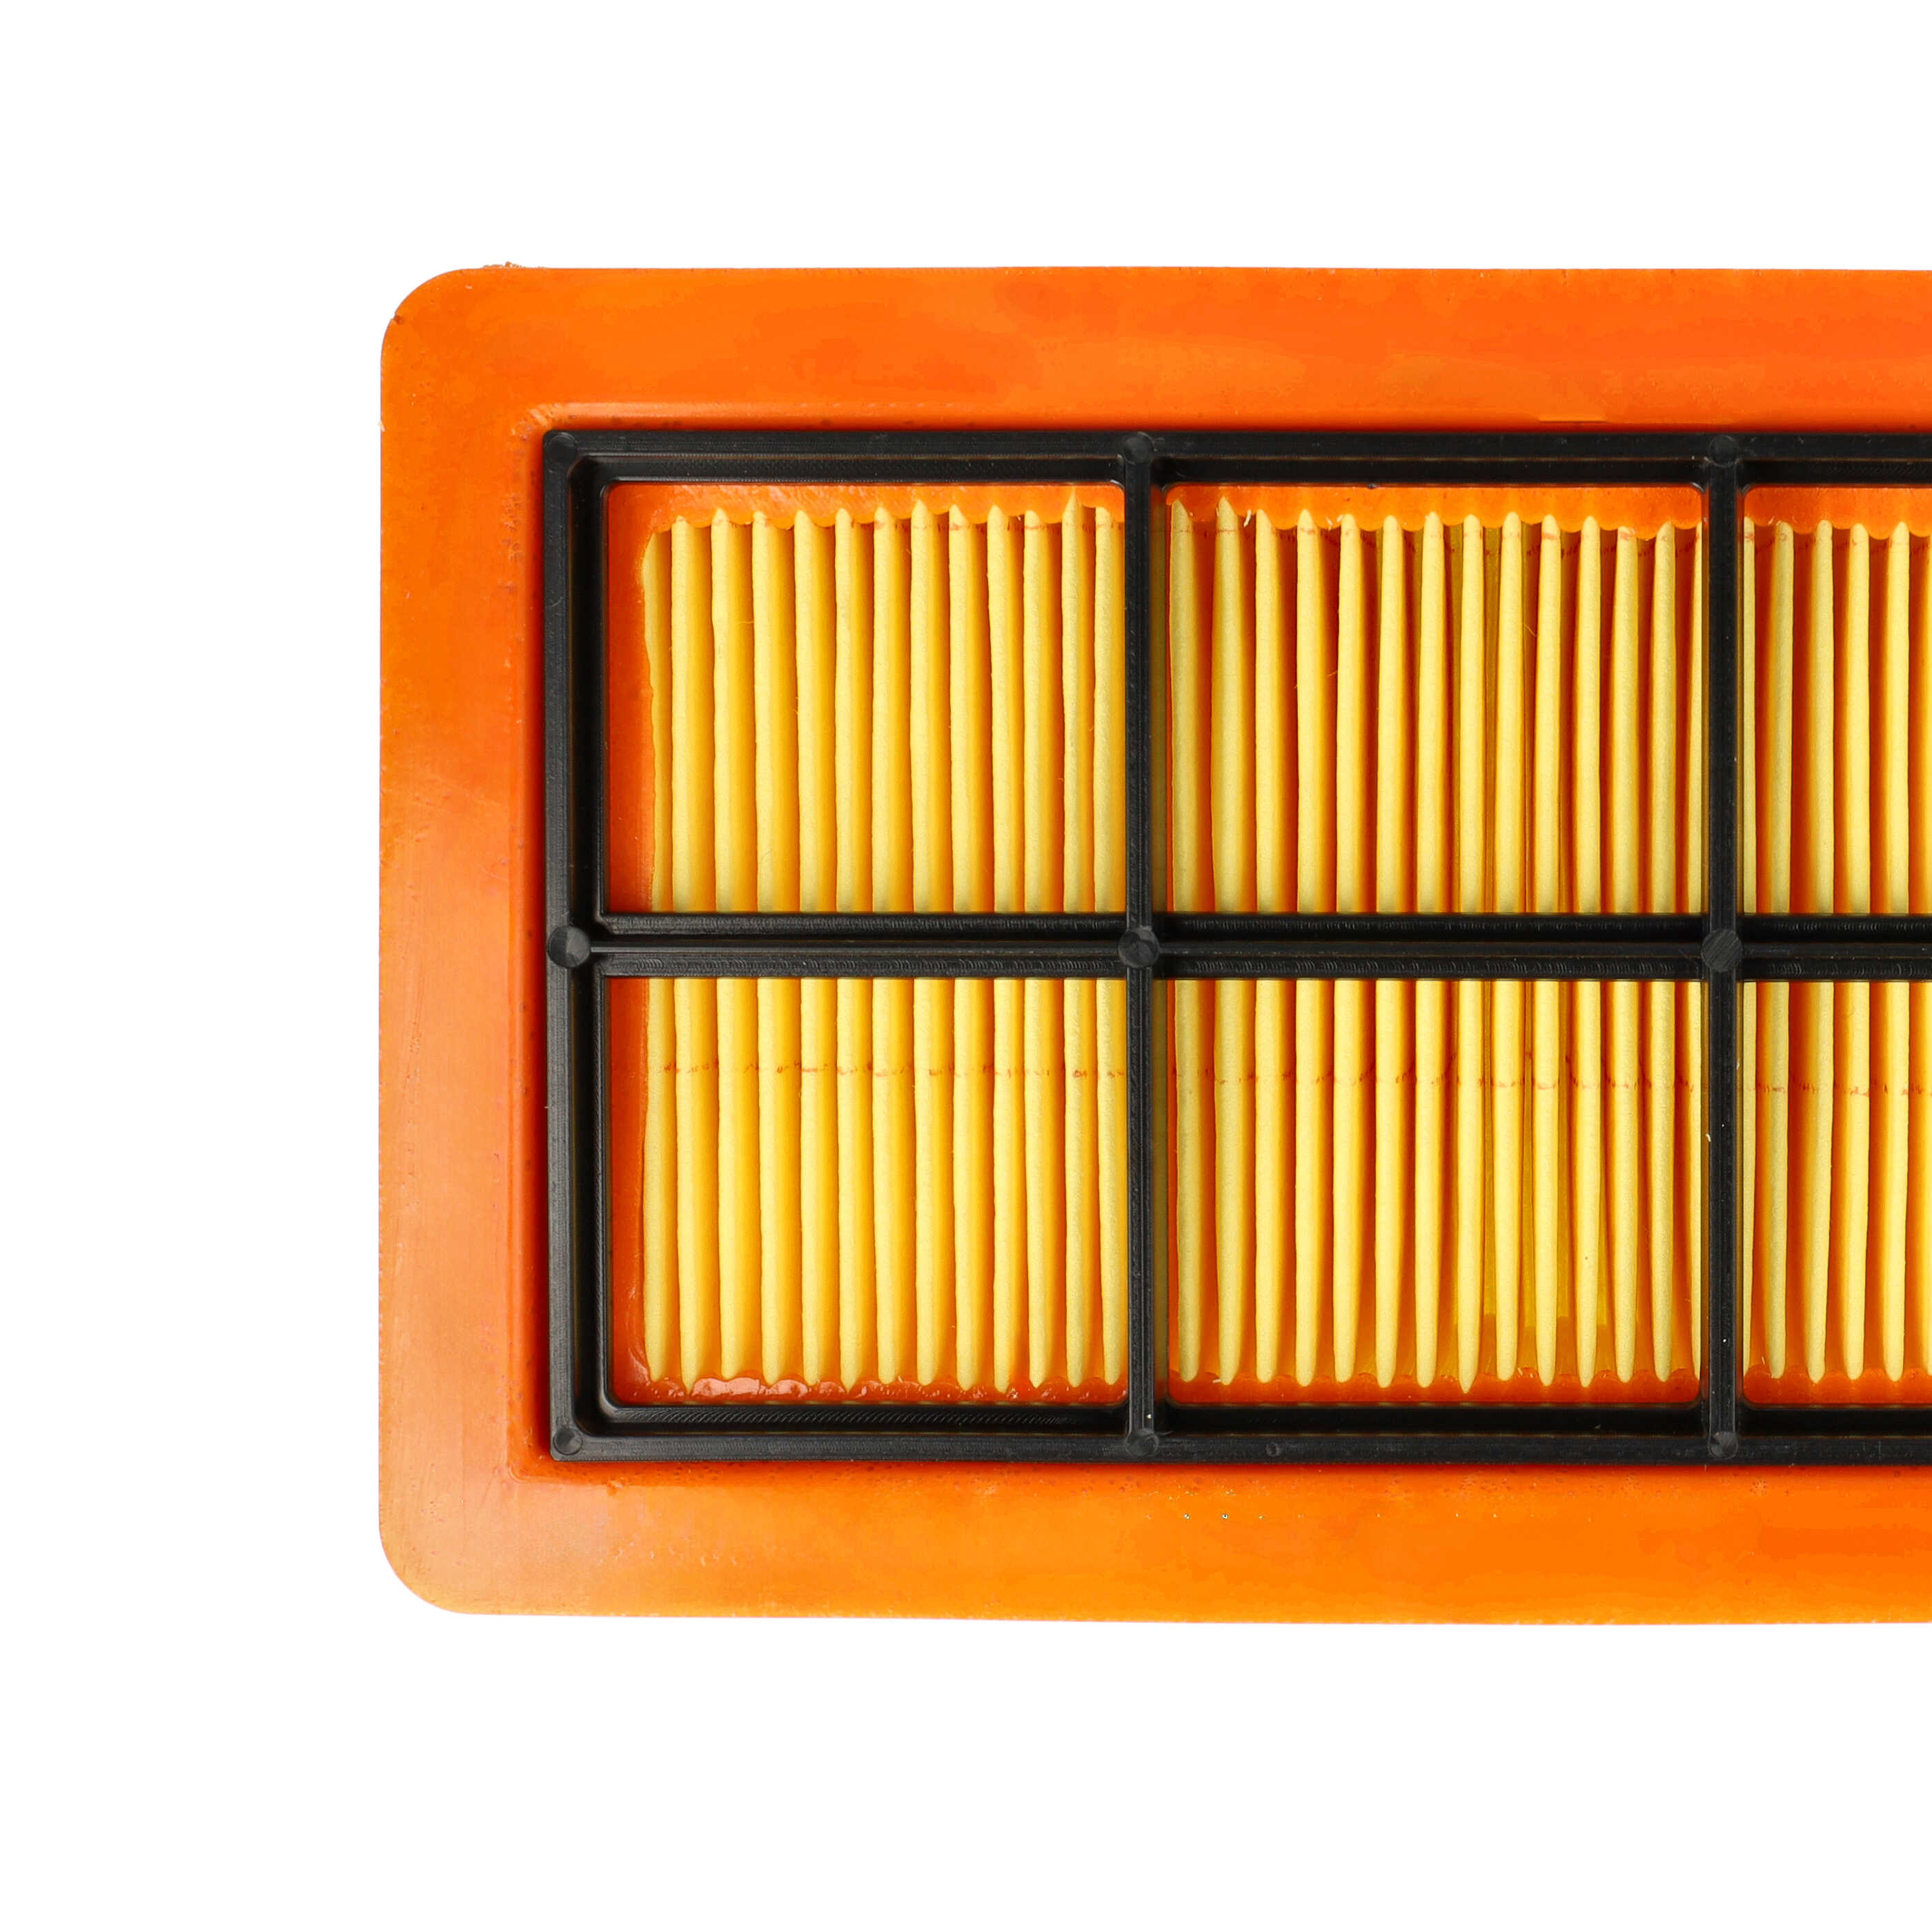 1x flat pleated filter replaces Kärcher 6.415-953.0, KFI 7420 for KärcherChimney Sweep Vacuum